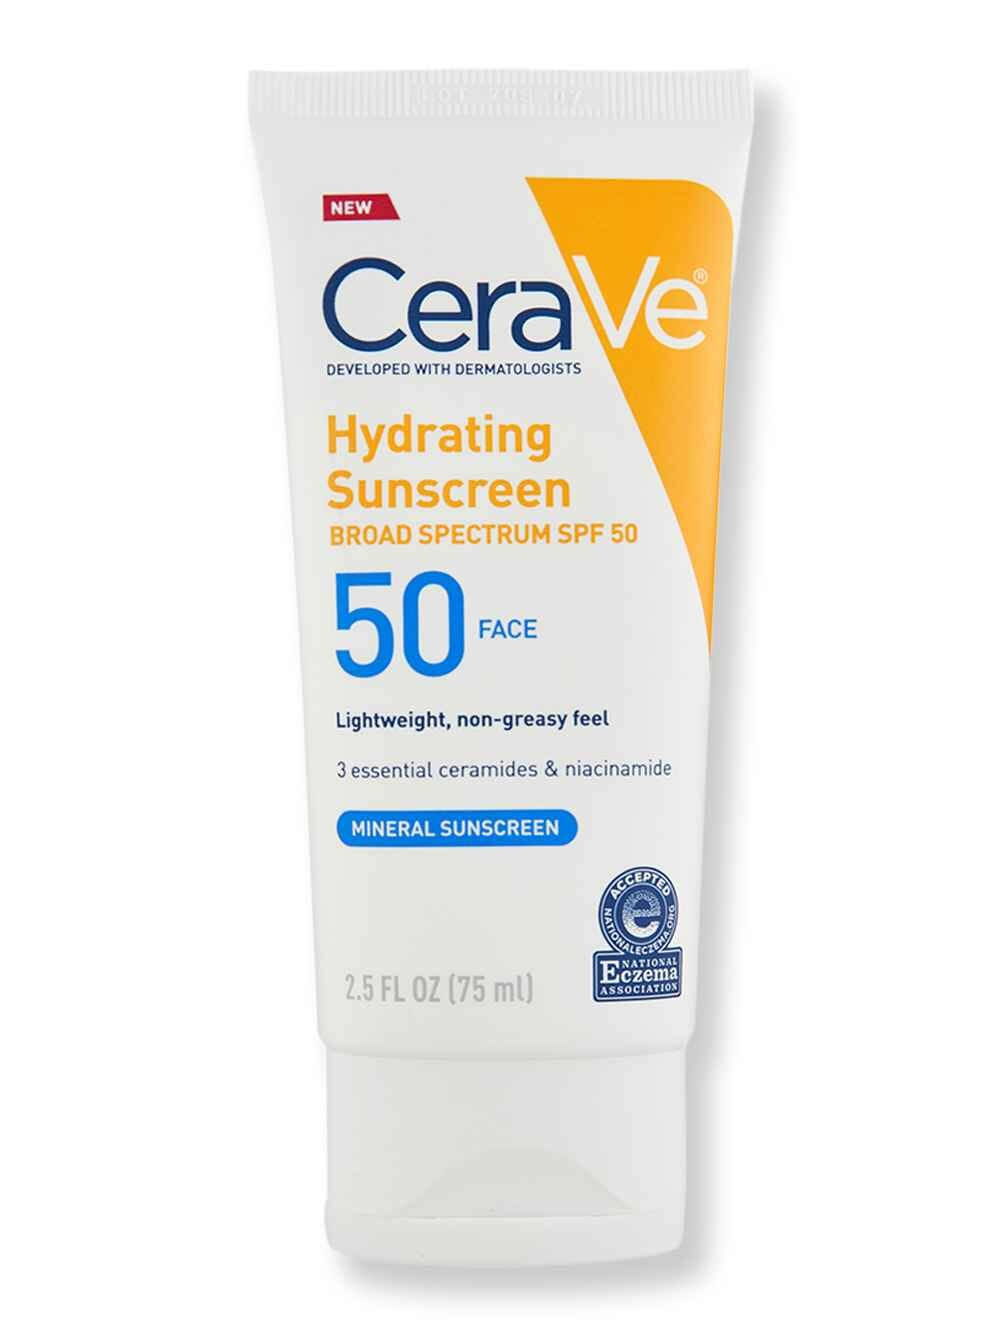 Cerave Hydrating Face Sunscreen - SPF 50, 2.5oz